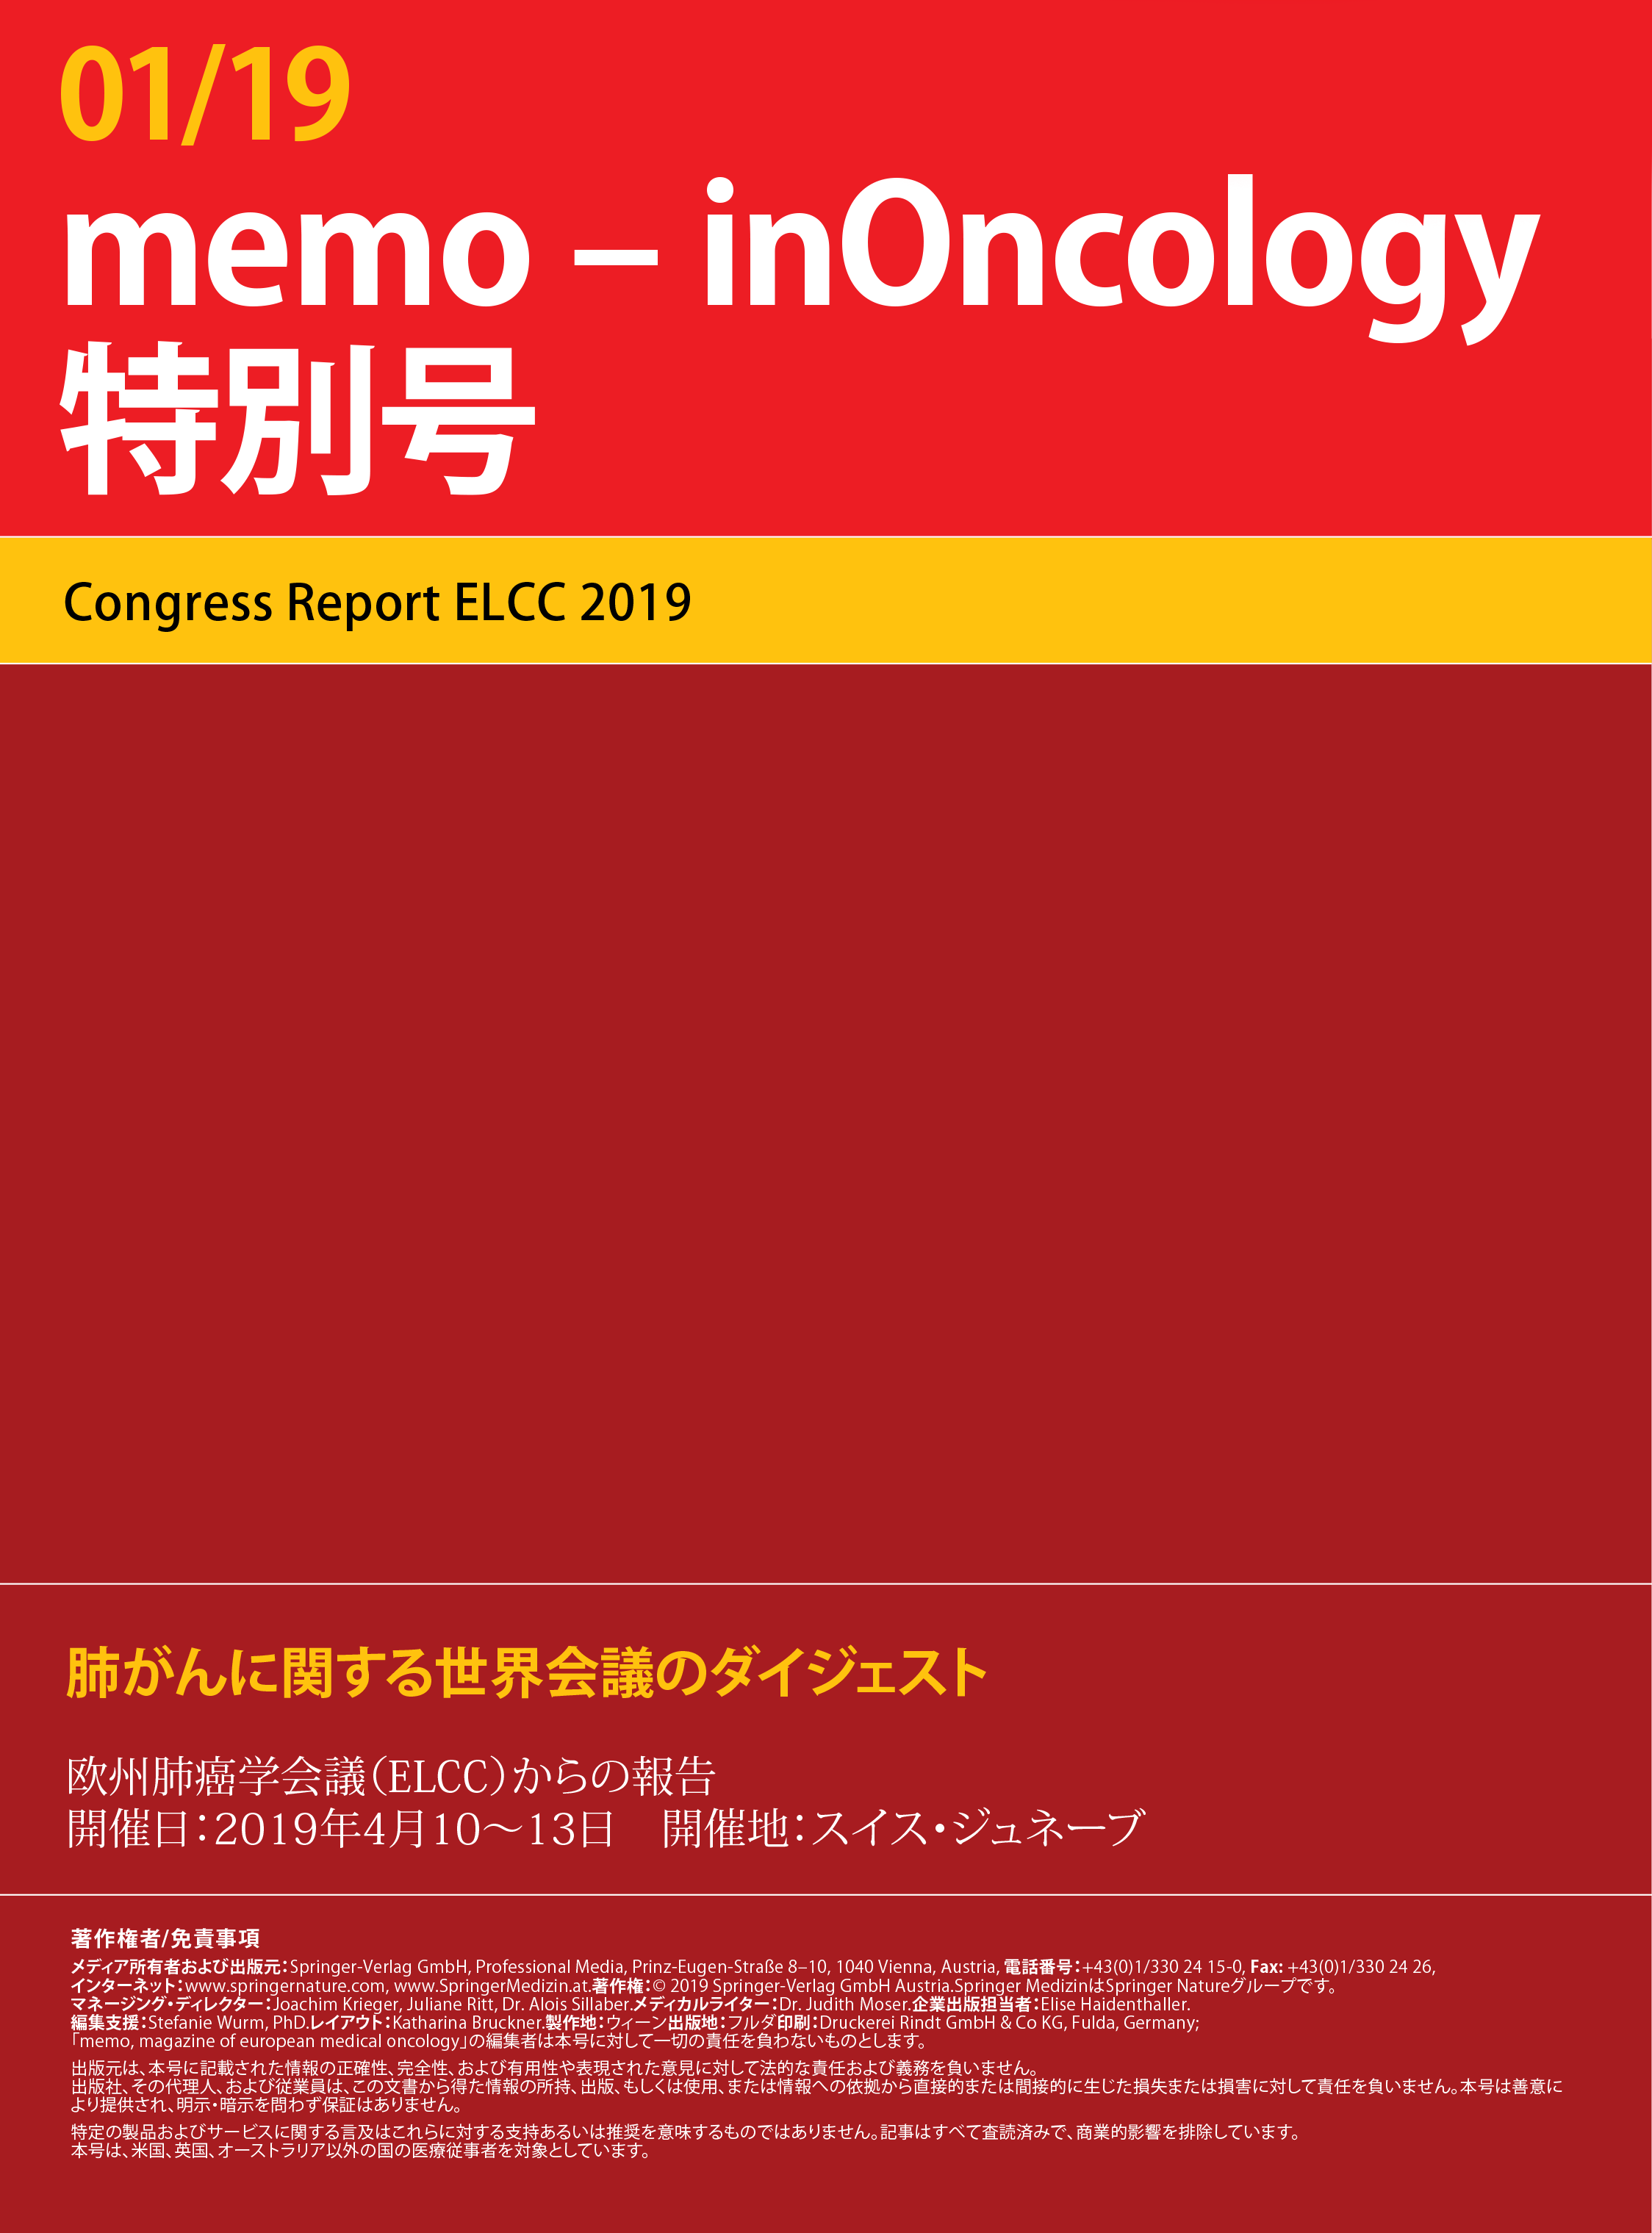 ELCC 2019 Japanese